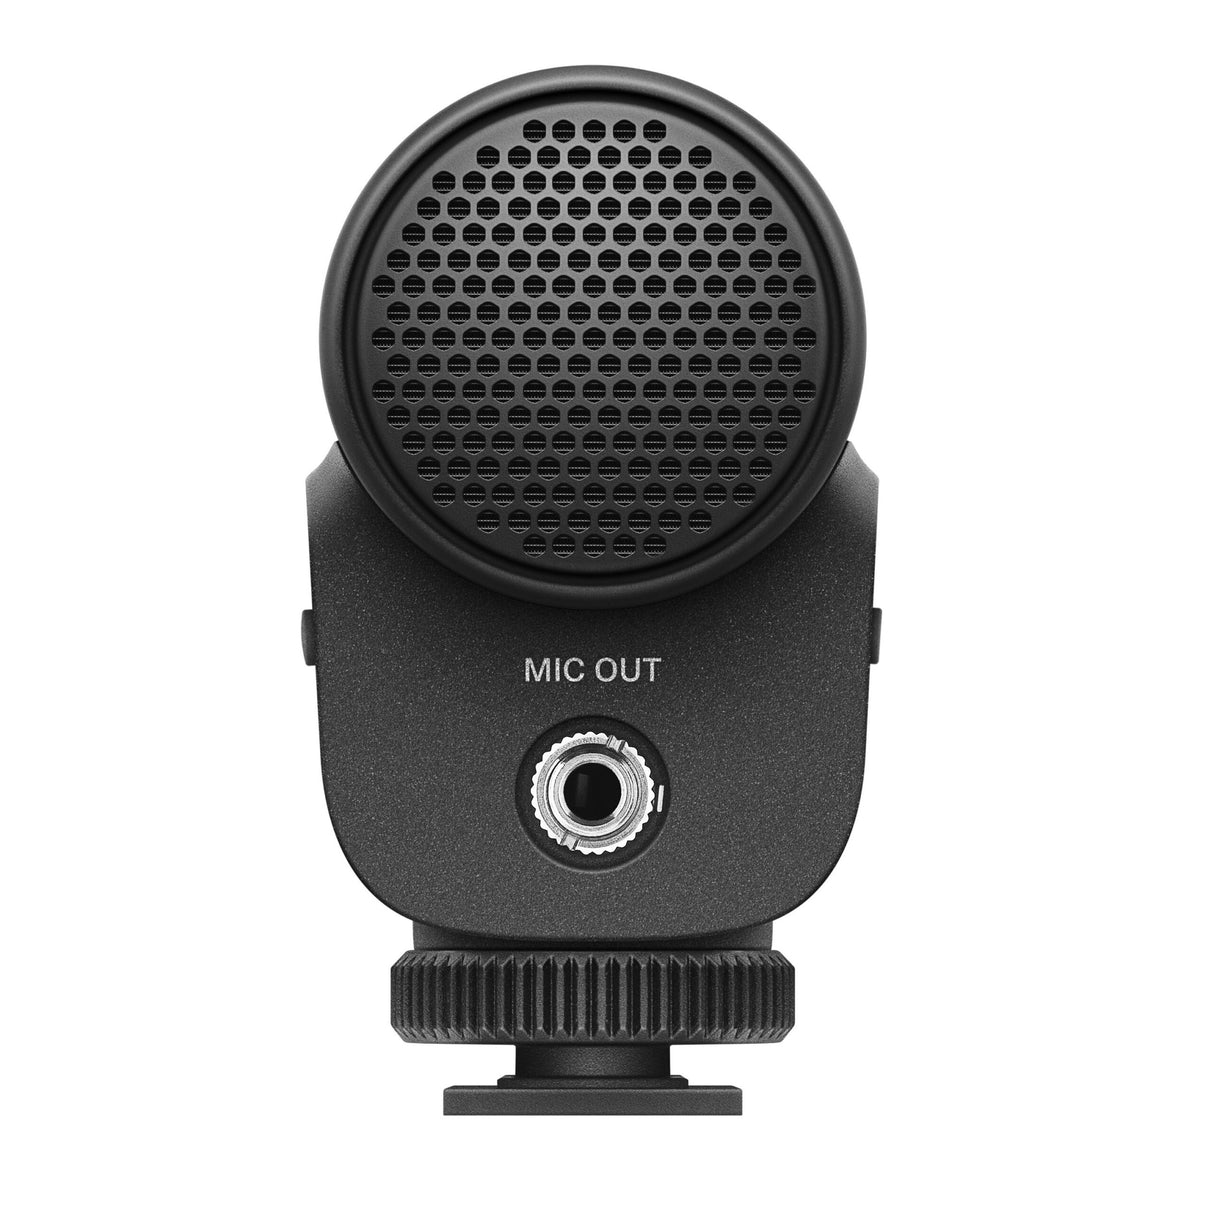 Sennheiser MKE 400 Highly Directional On-Camera Shotgun Microphone (Used)